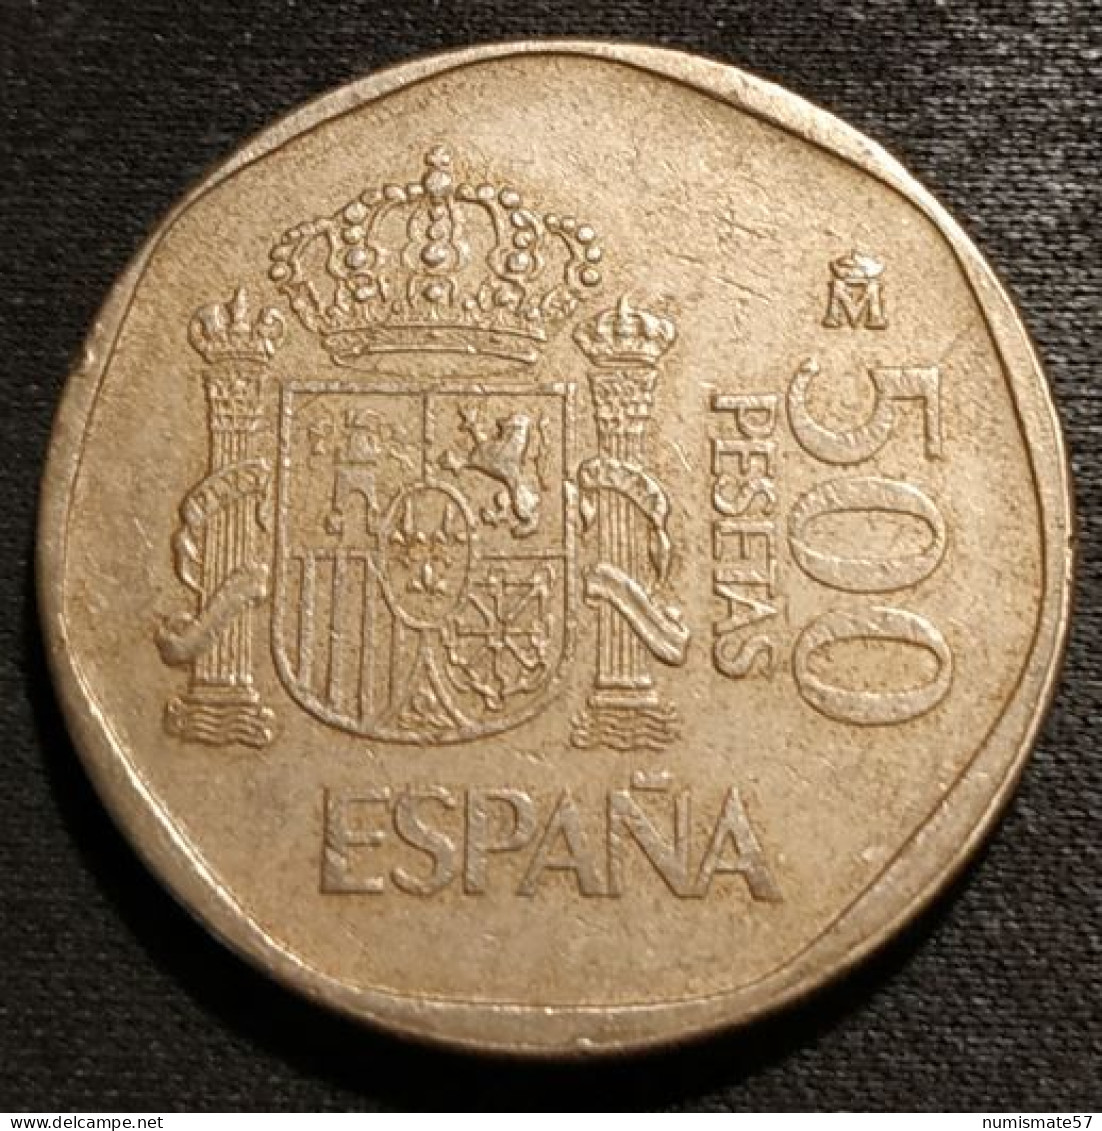 ESPAGNE - ESPANA - SPAIN - 500 PESETAS 1989 - Juan Carlos I - KM 831 - 500 Peseta